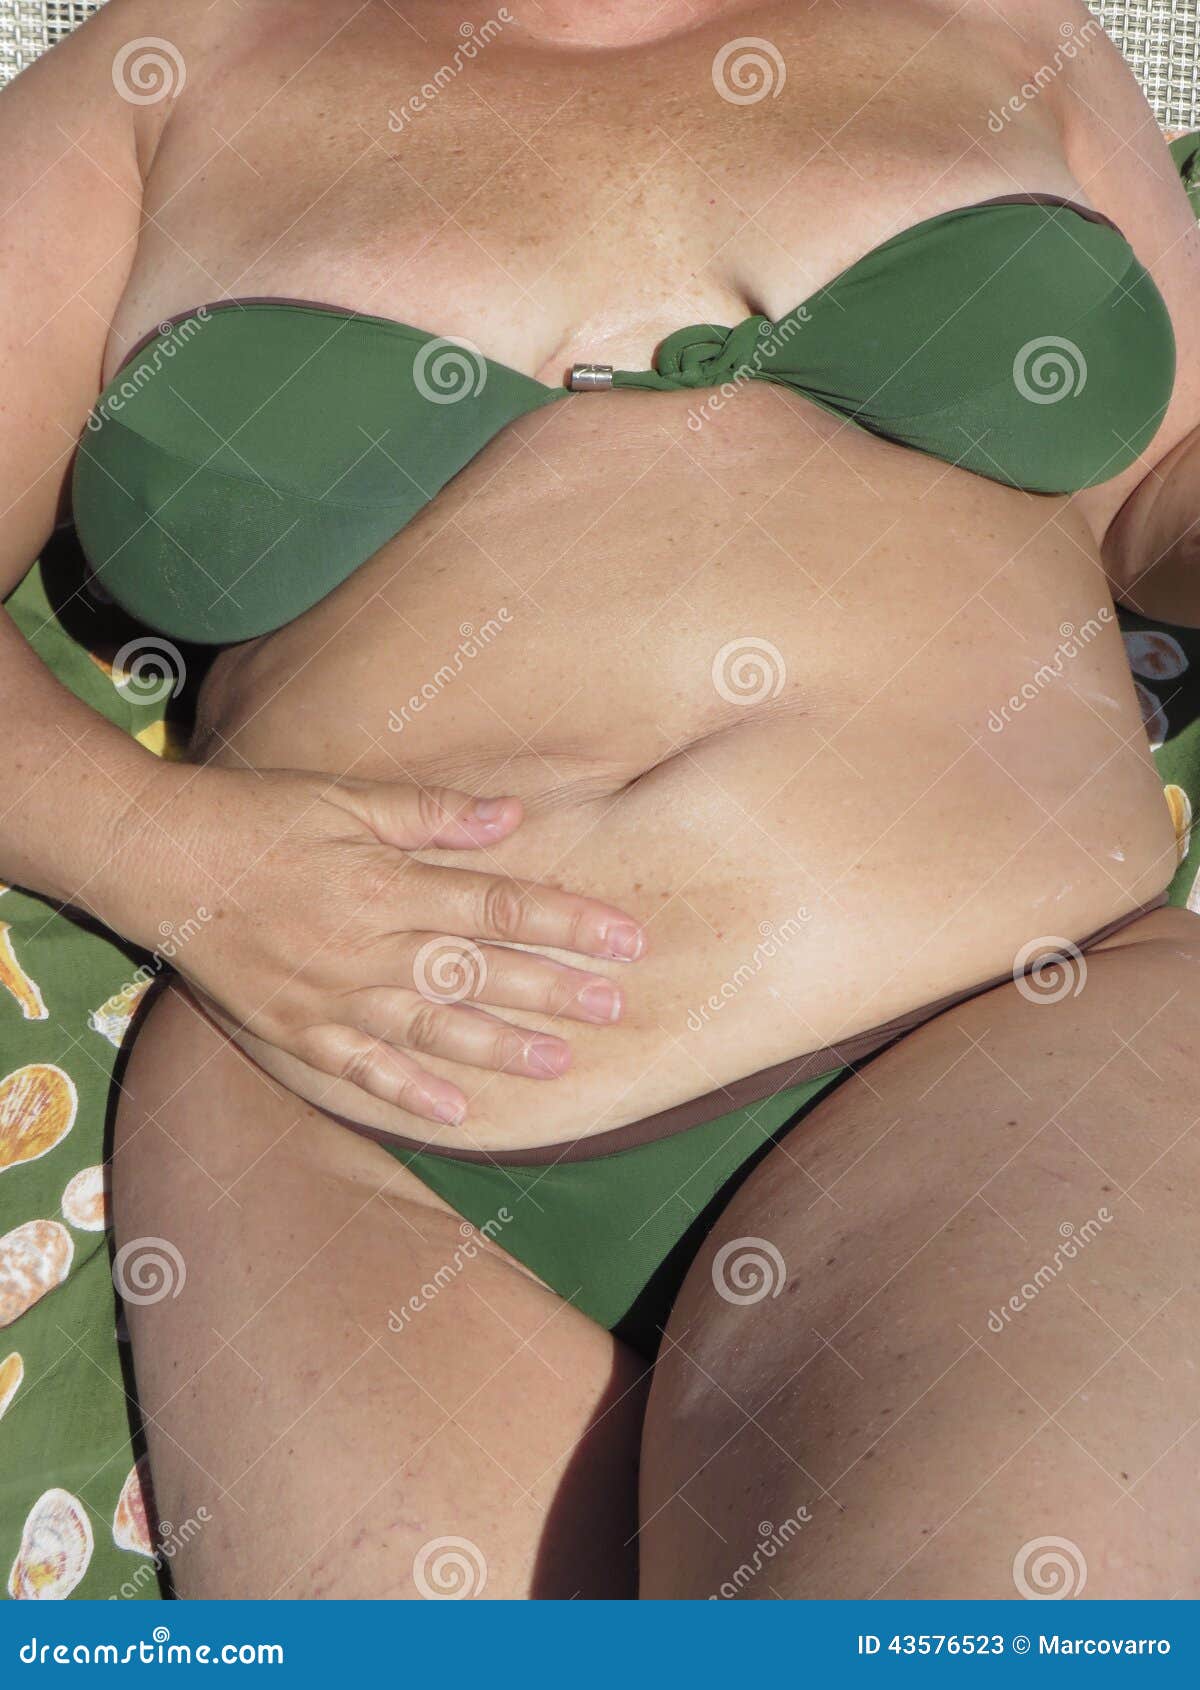 178 Chubby Lady Bikini Stock Photos